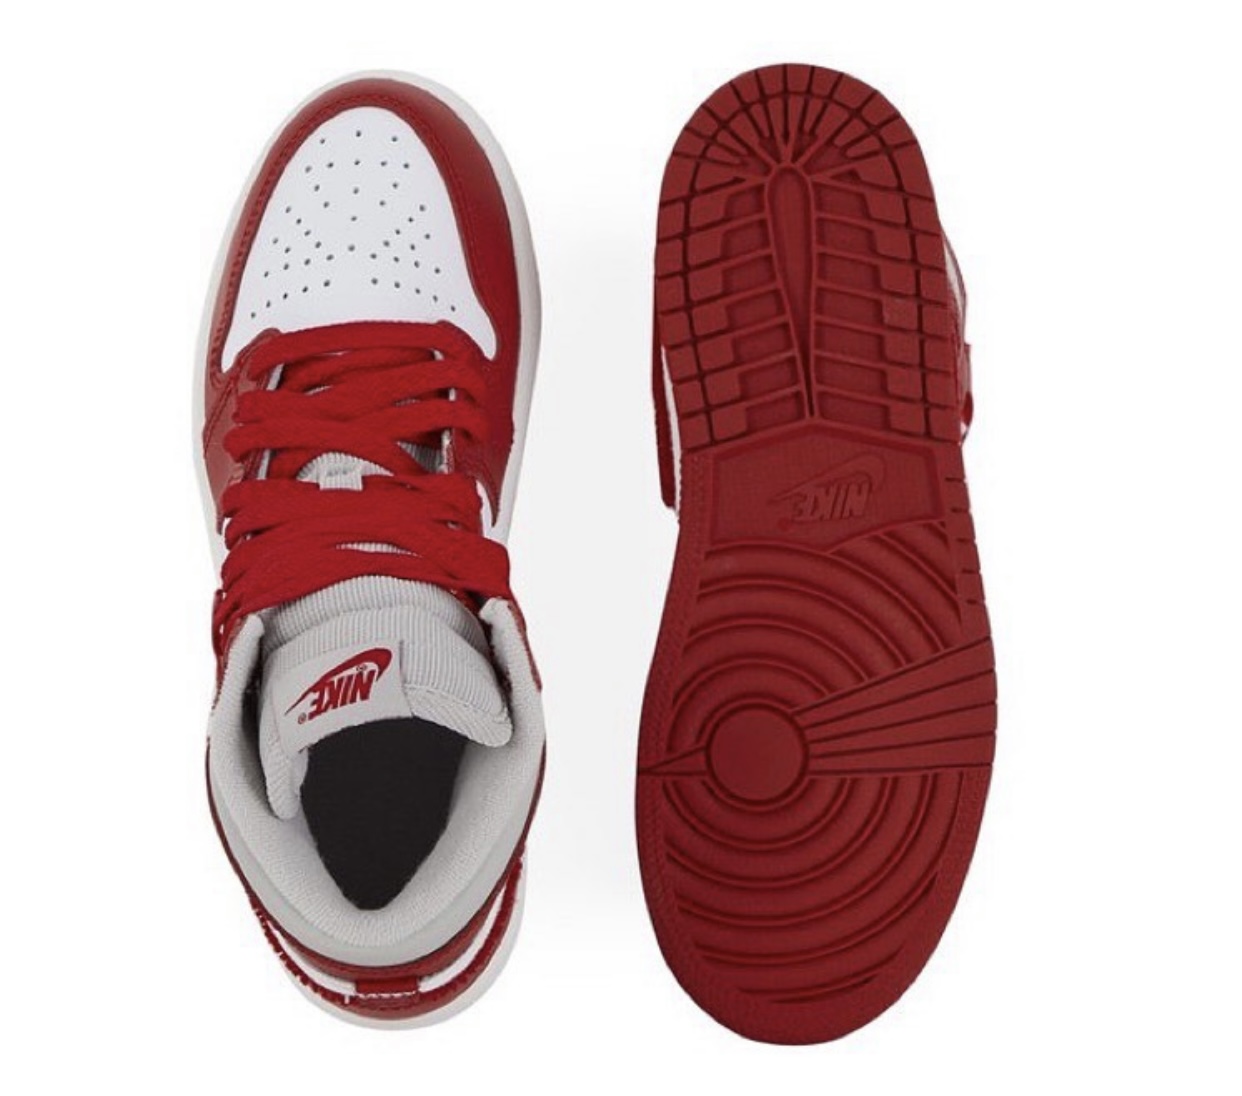 Air Jordan 1 High OG “Varsity Red”